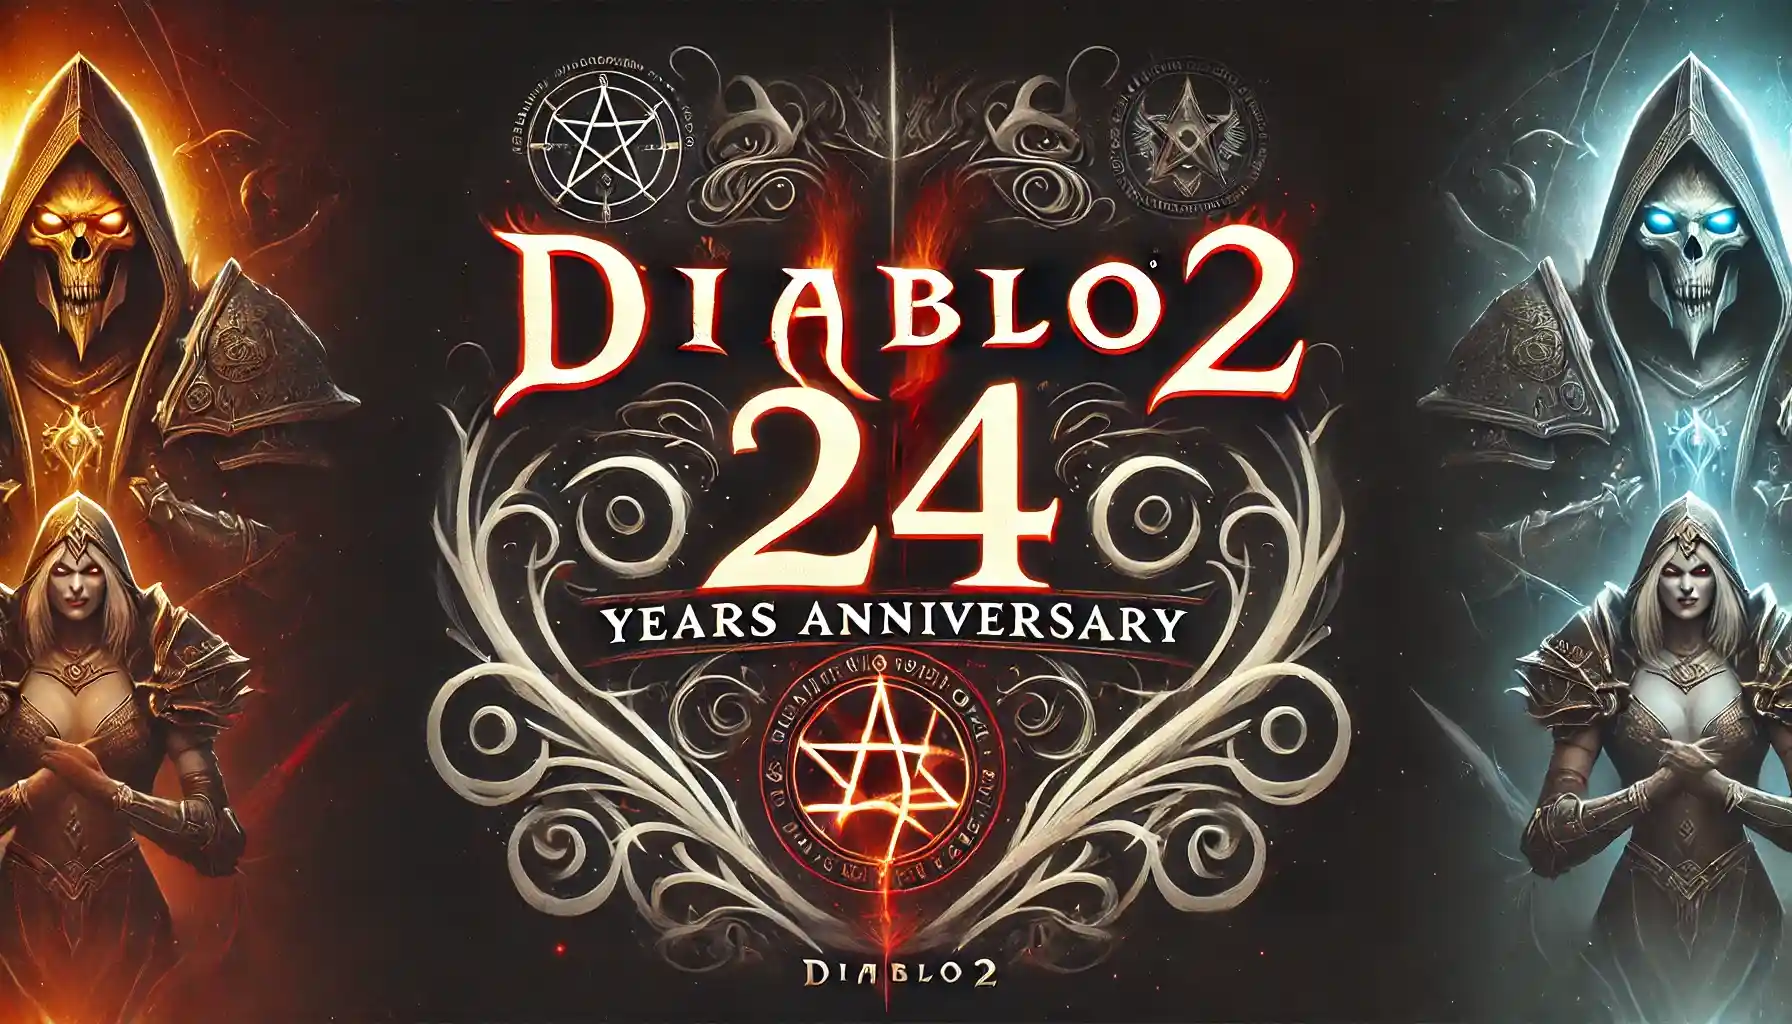 Diablo 2 Is 24 Years Old - Sharing Our Fondest Memories